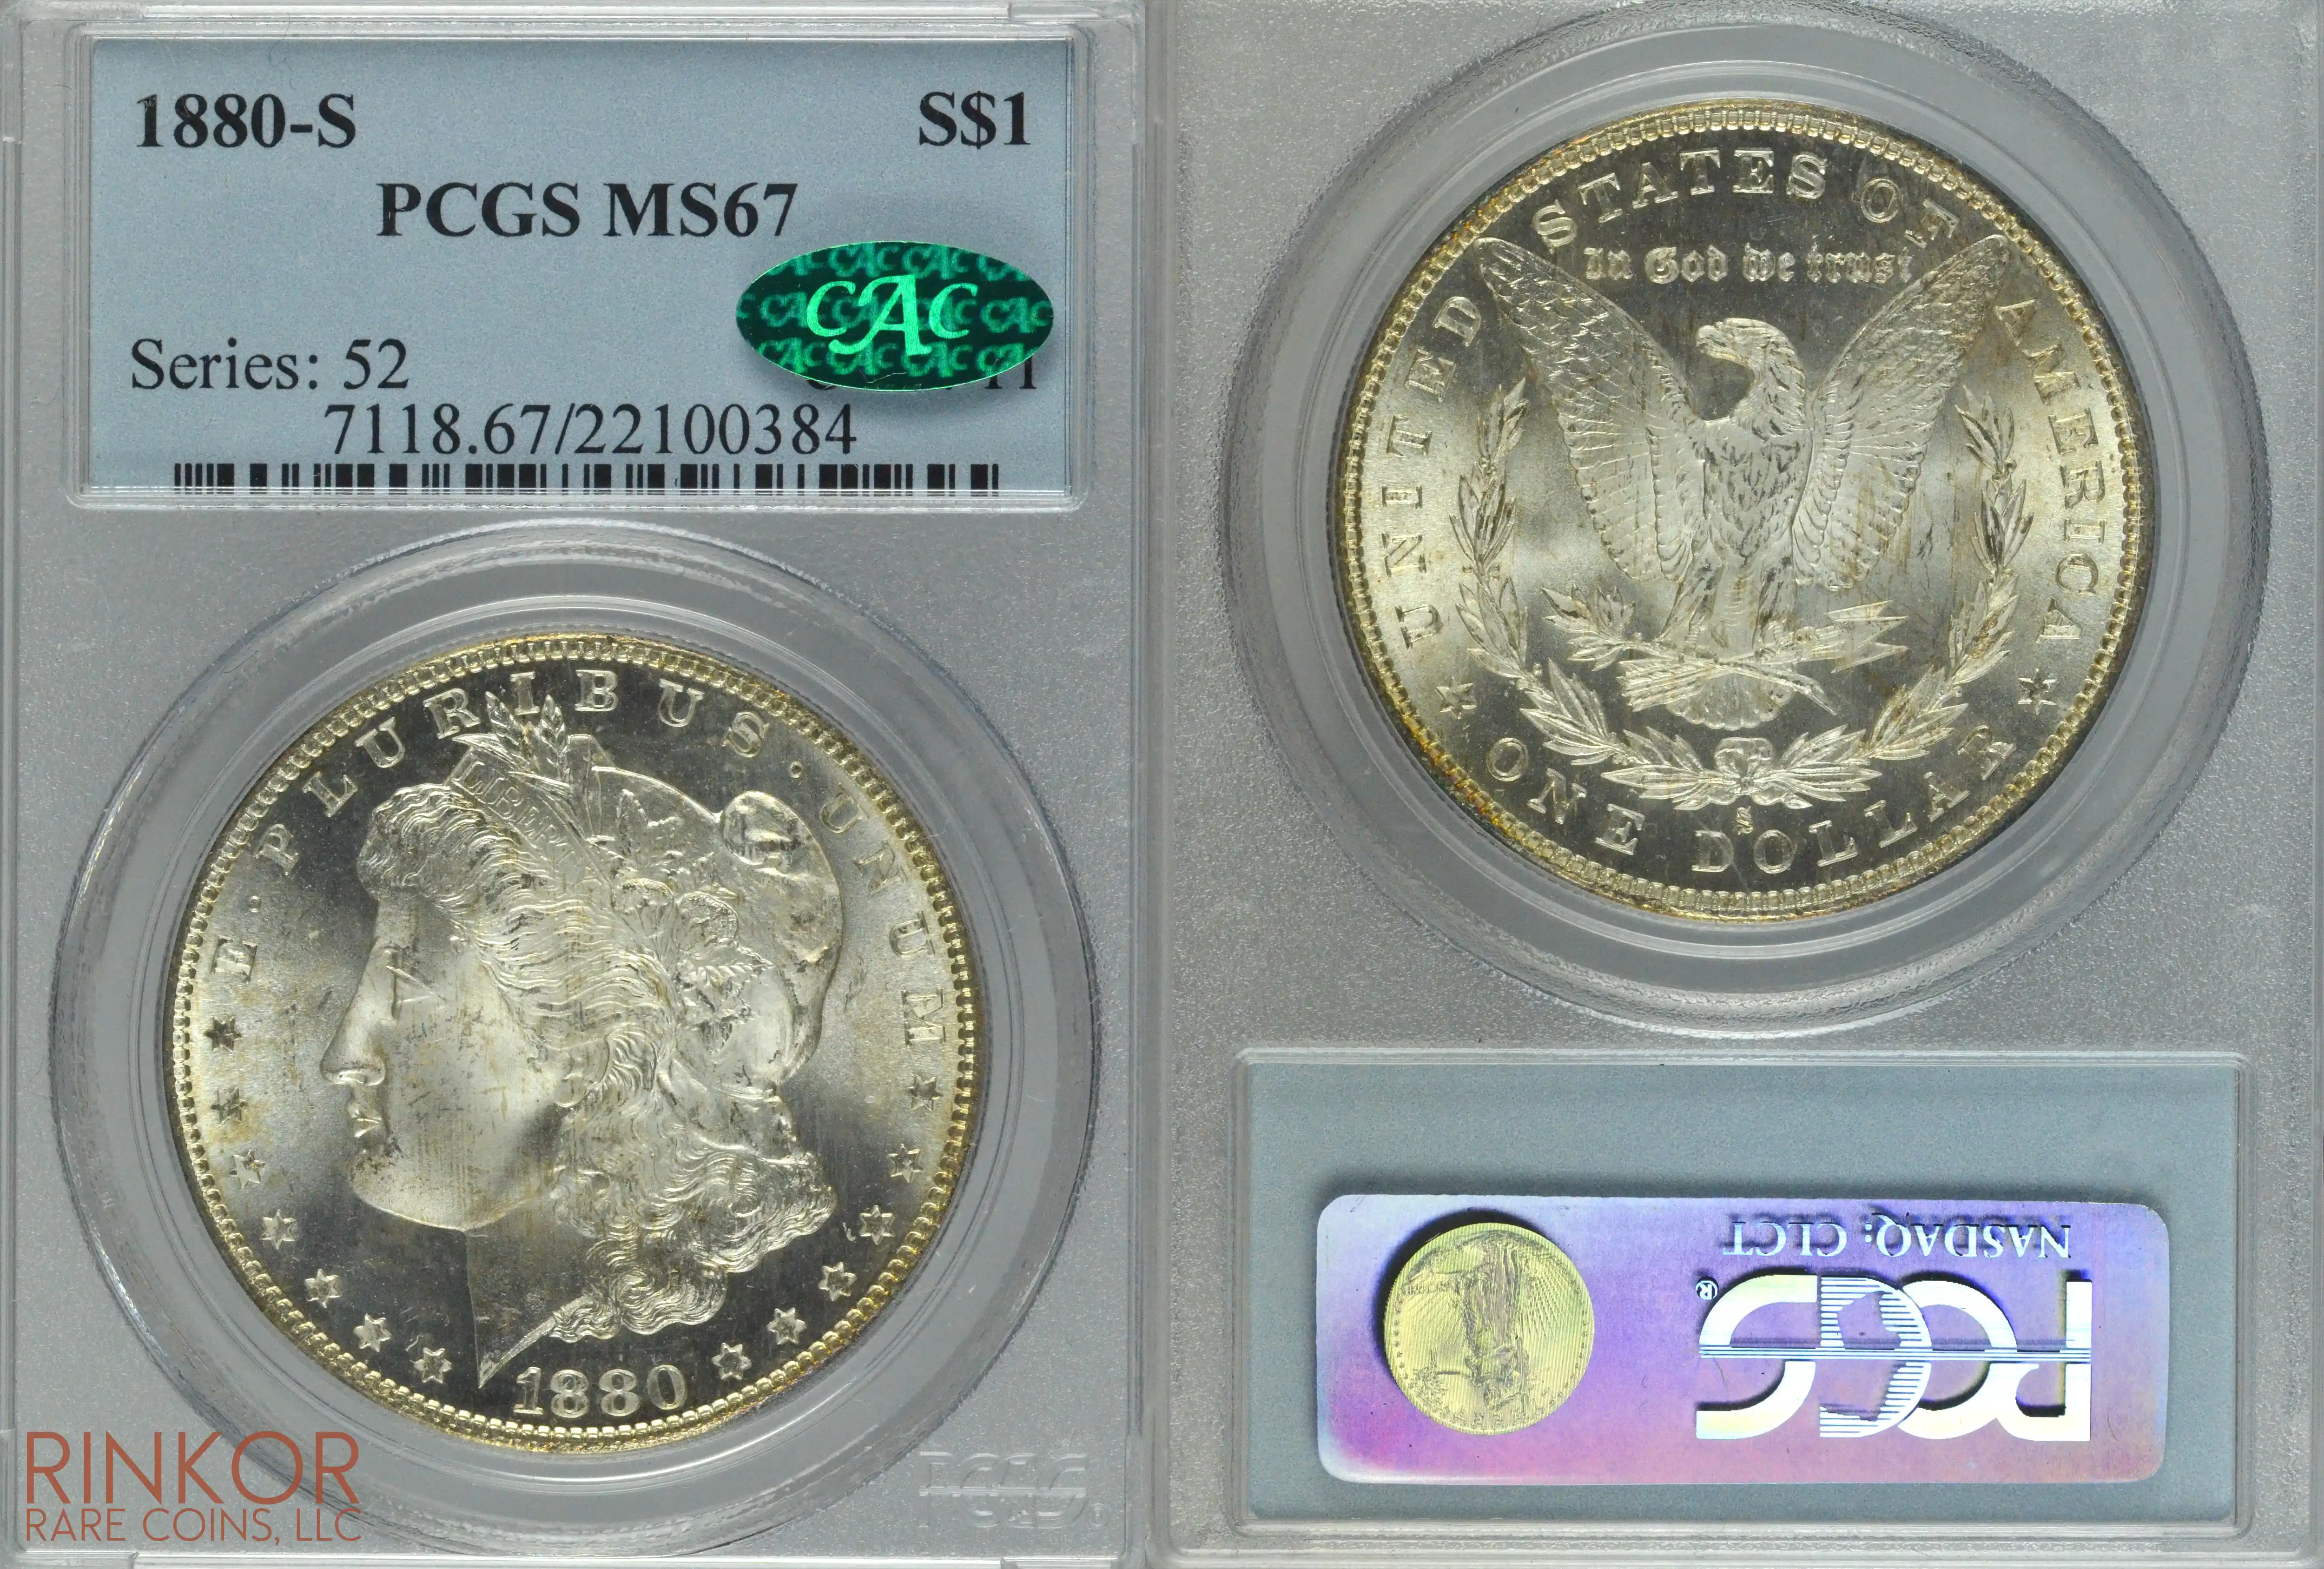 1880-S $1 PCGS MS 67 CAC